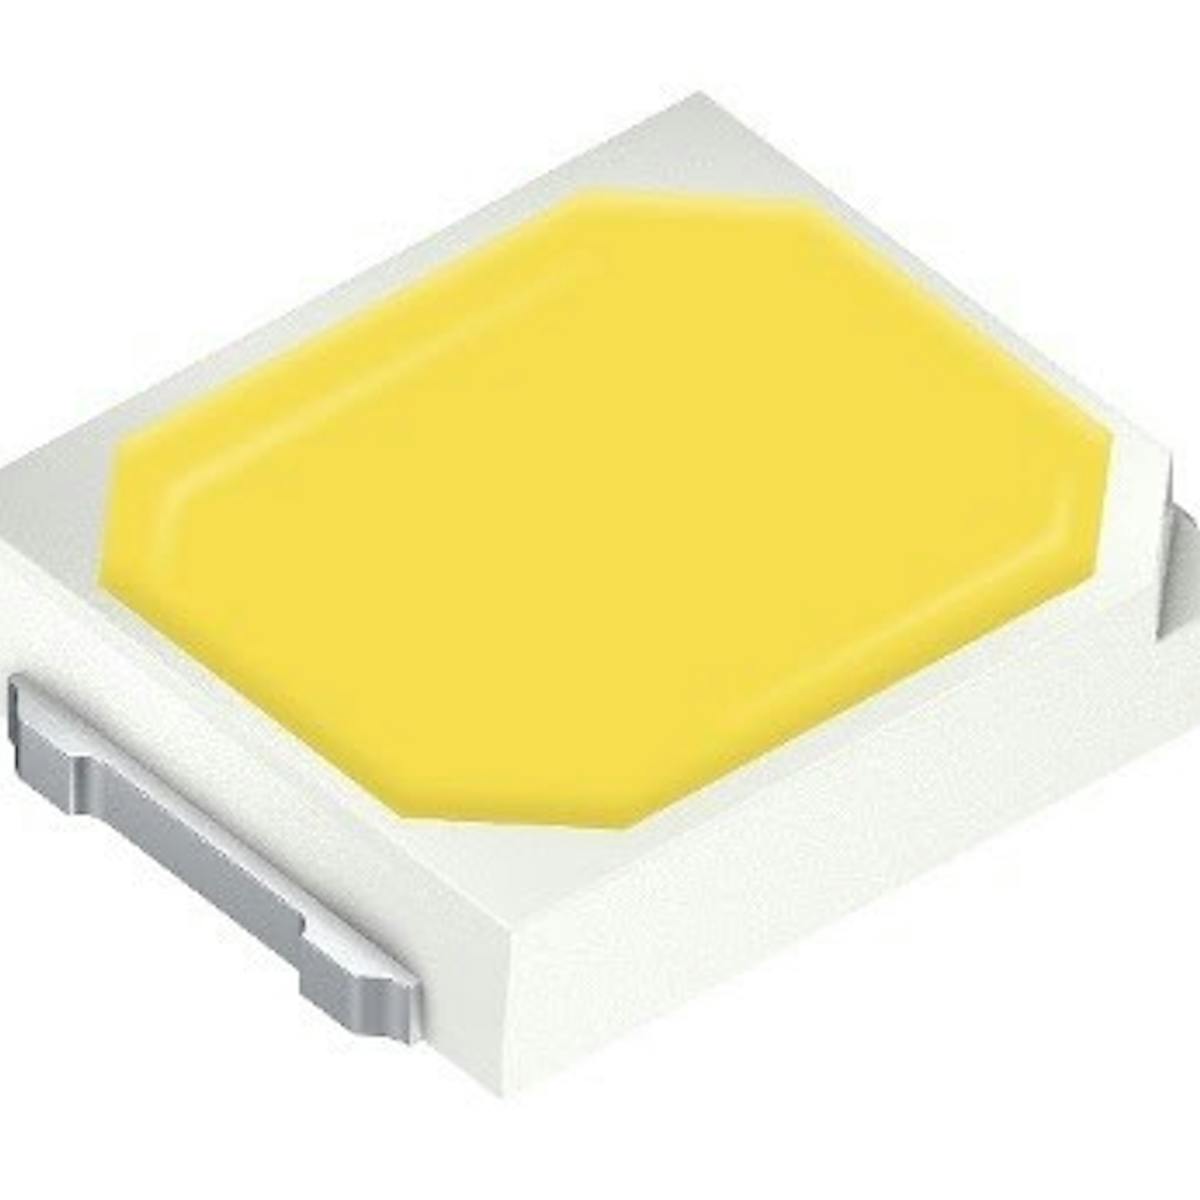 The Osconiq E 2835 CRI 90 quantum-dot (QD) LED has been designed for homogenous warm-white illumination with high efficacy. (Photo credit: Image courtesy of ams Osram.)